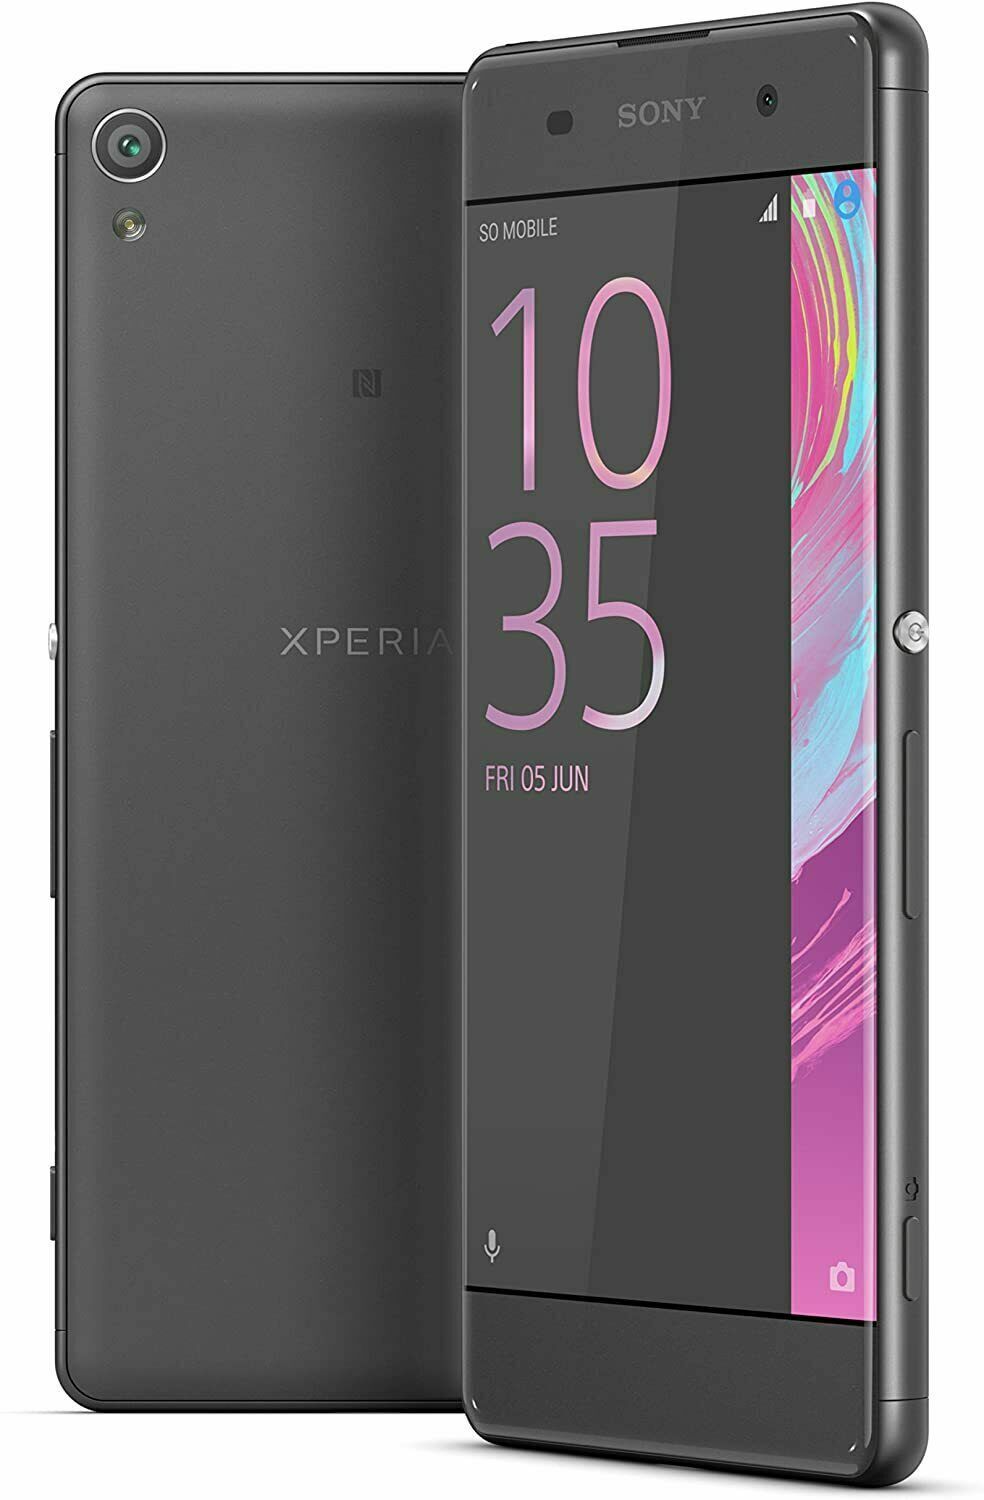 Xperia XA F3112 - 16GB - Graphite Black (Unlocked) Smartphone for sale online | eBay